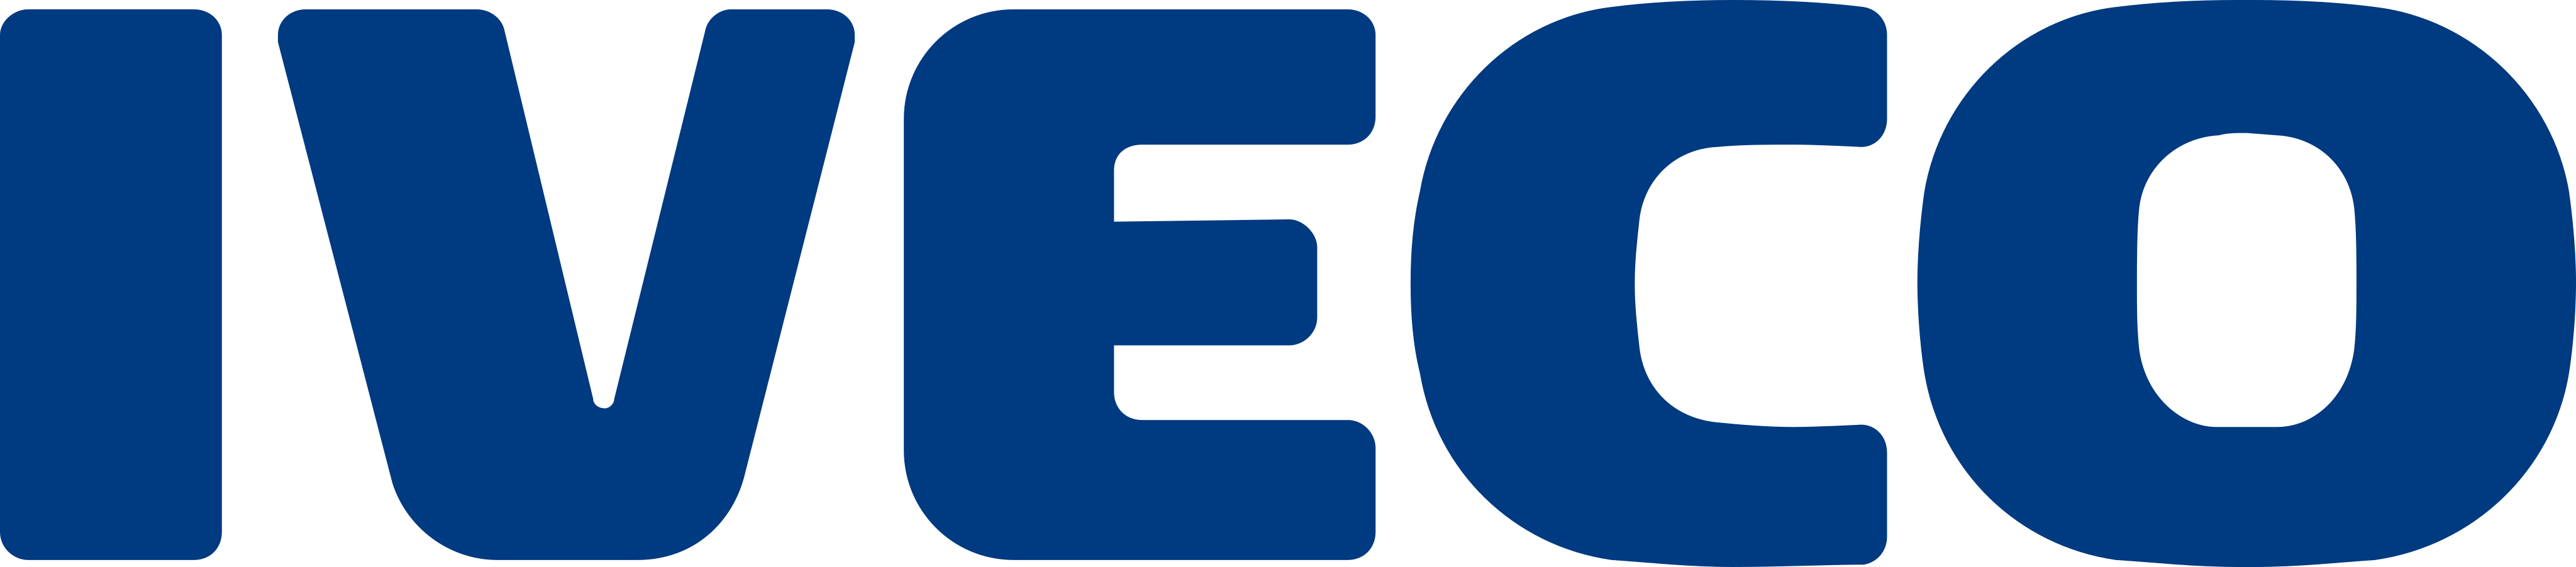 iveco-logo-8